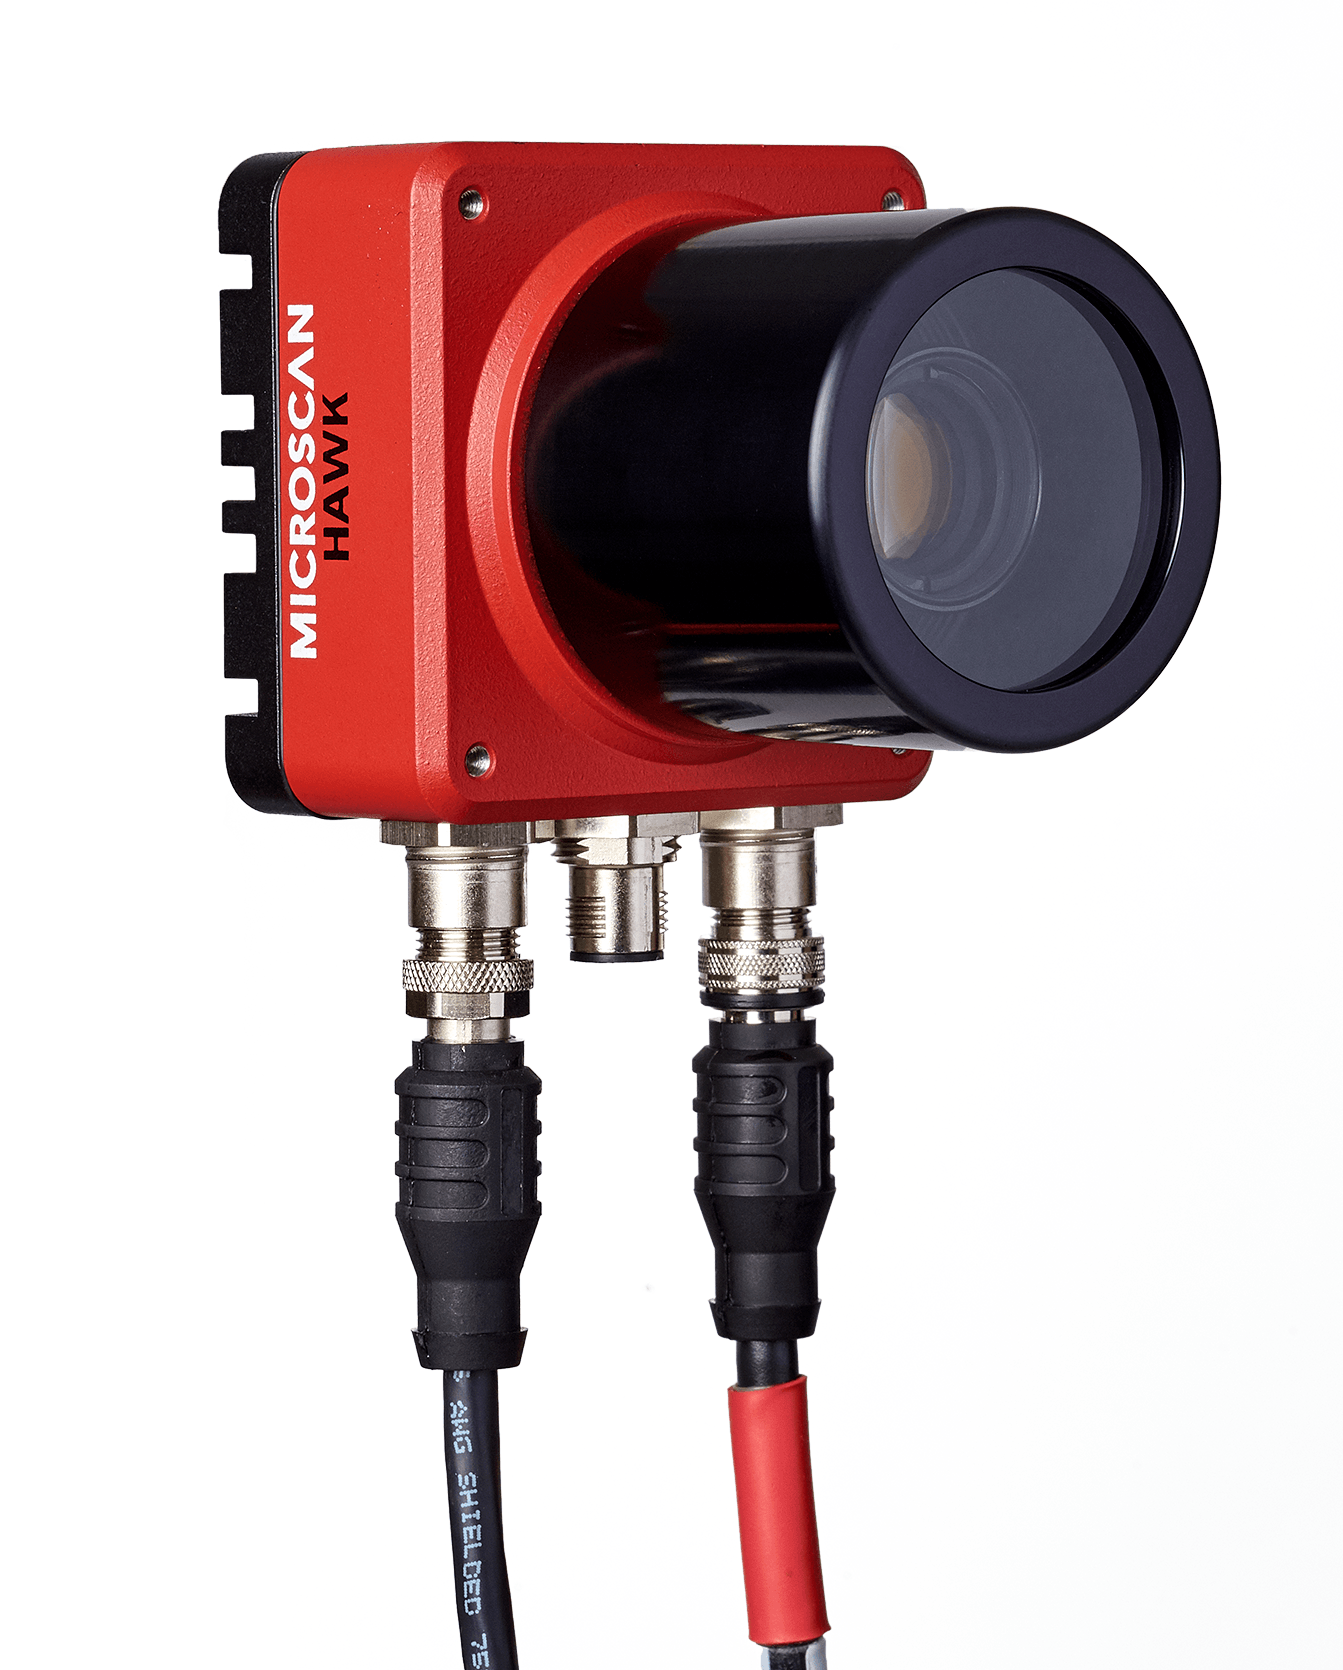 HAWK MV-4000 High-Performance Smart Camera